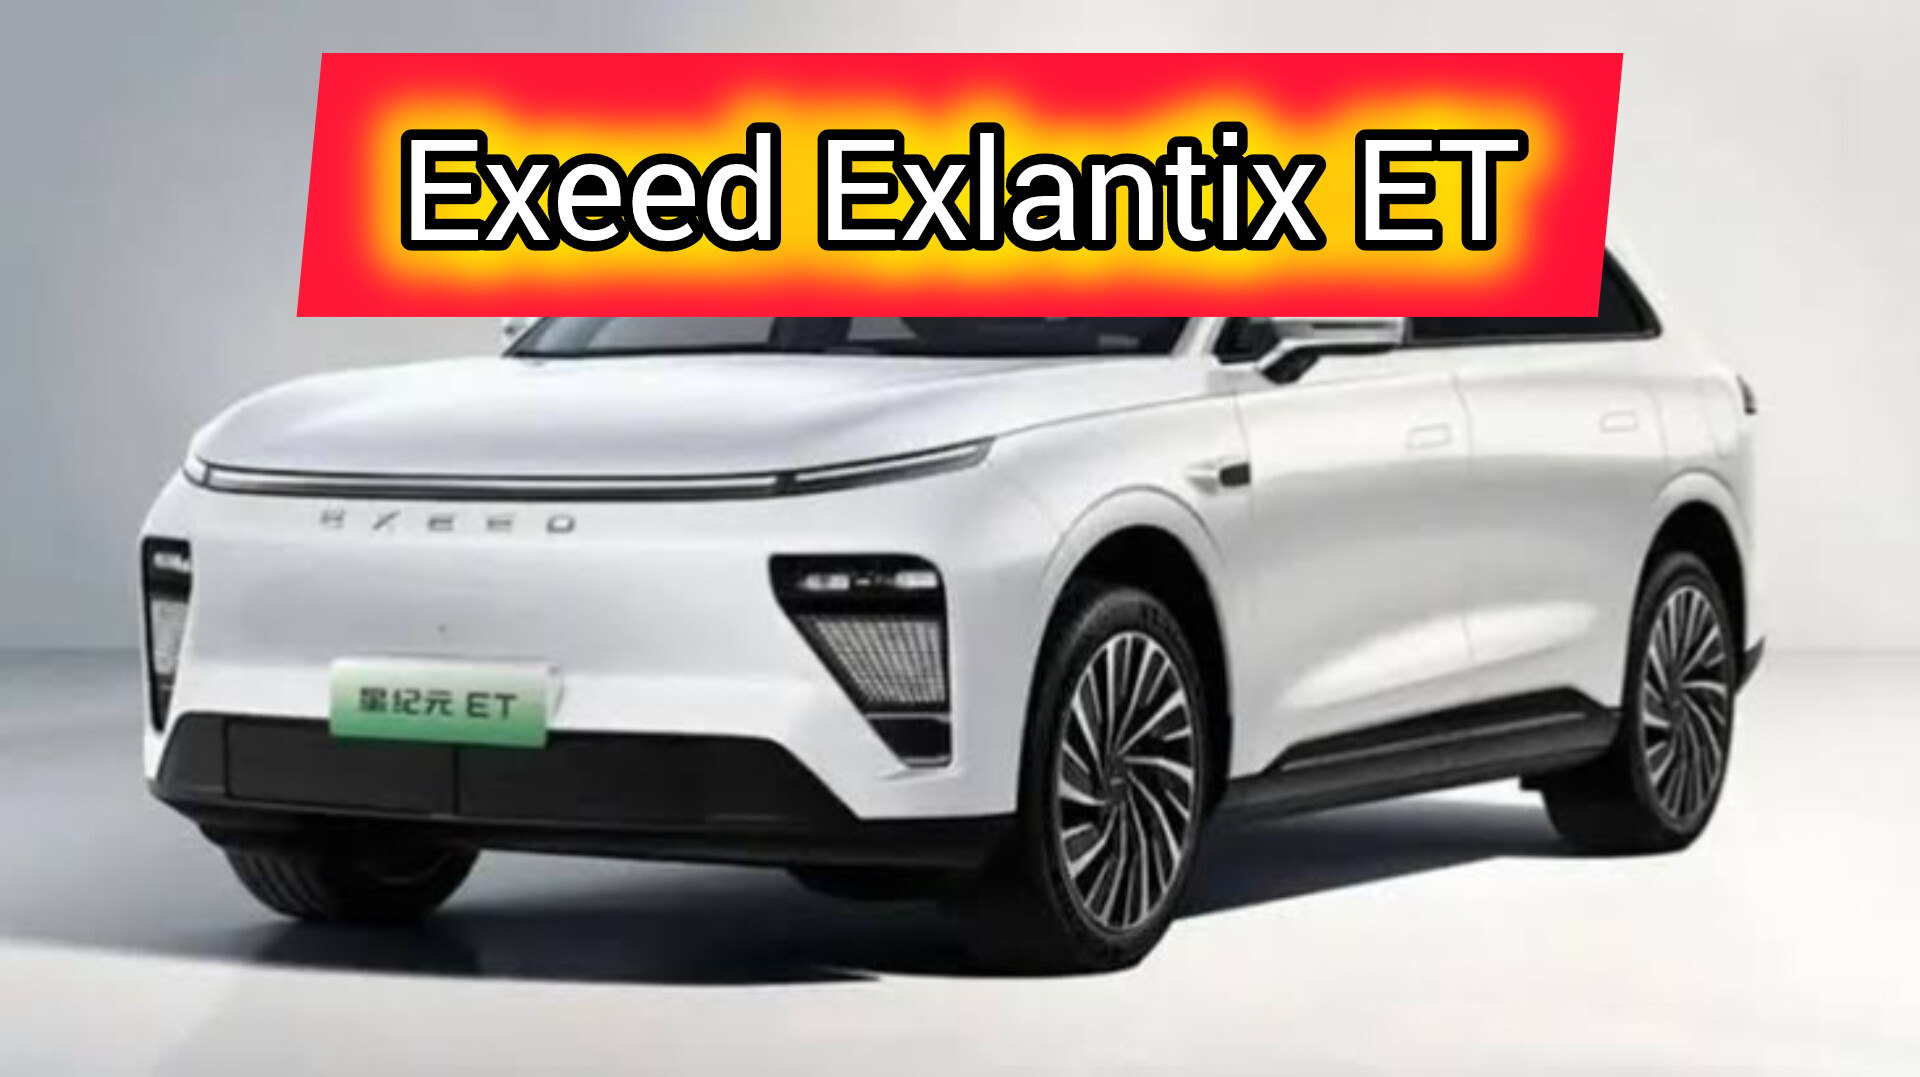 Mobil Listrik Terbaru Exeed Exlantix ET Dapat Menempuh 2000 km Dengan Sekali Pengisian Baterai